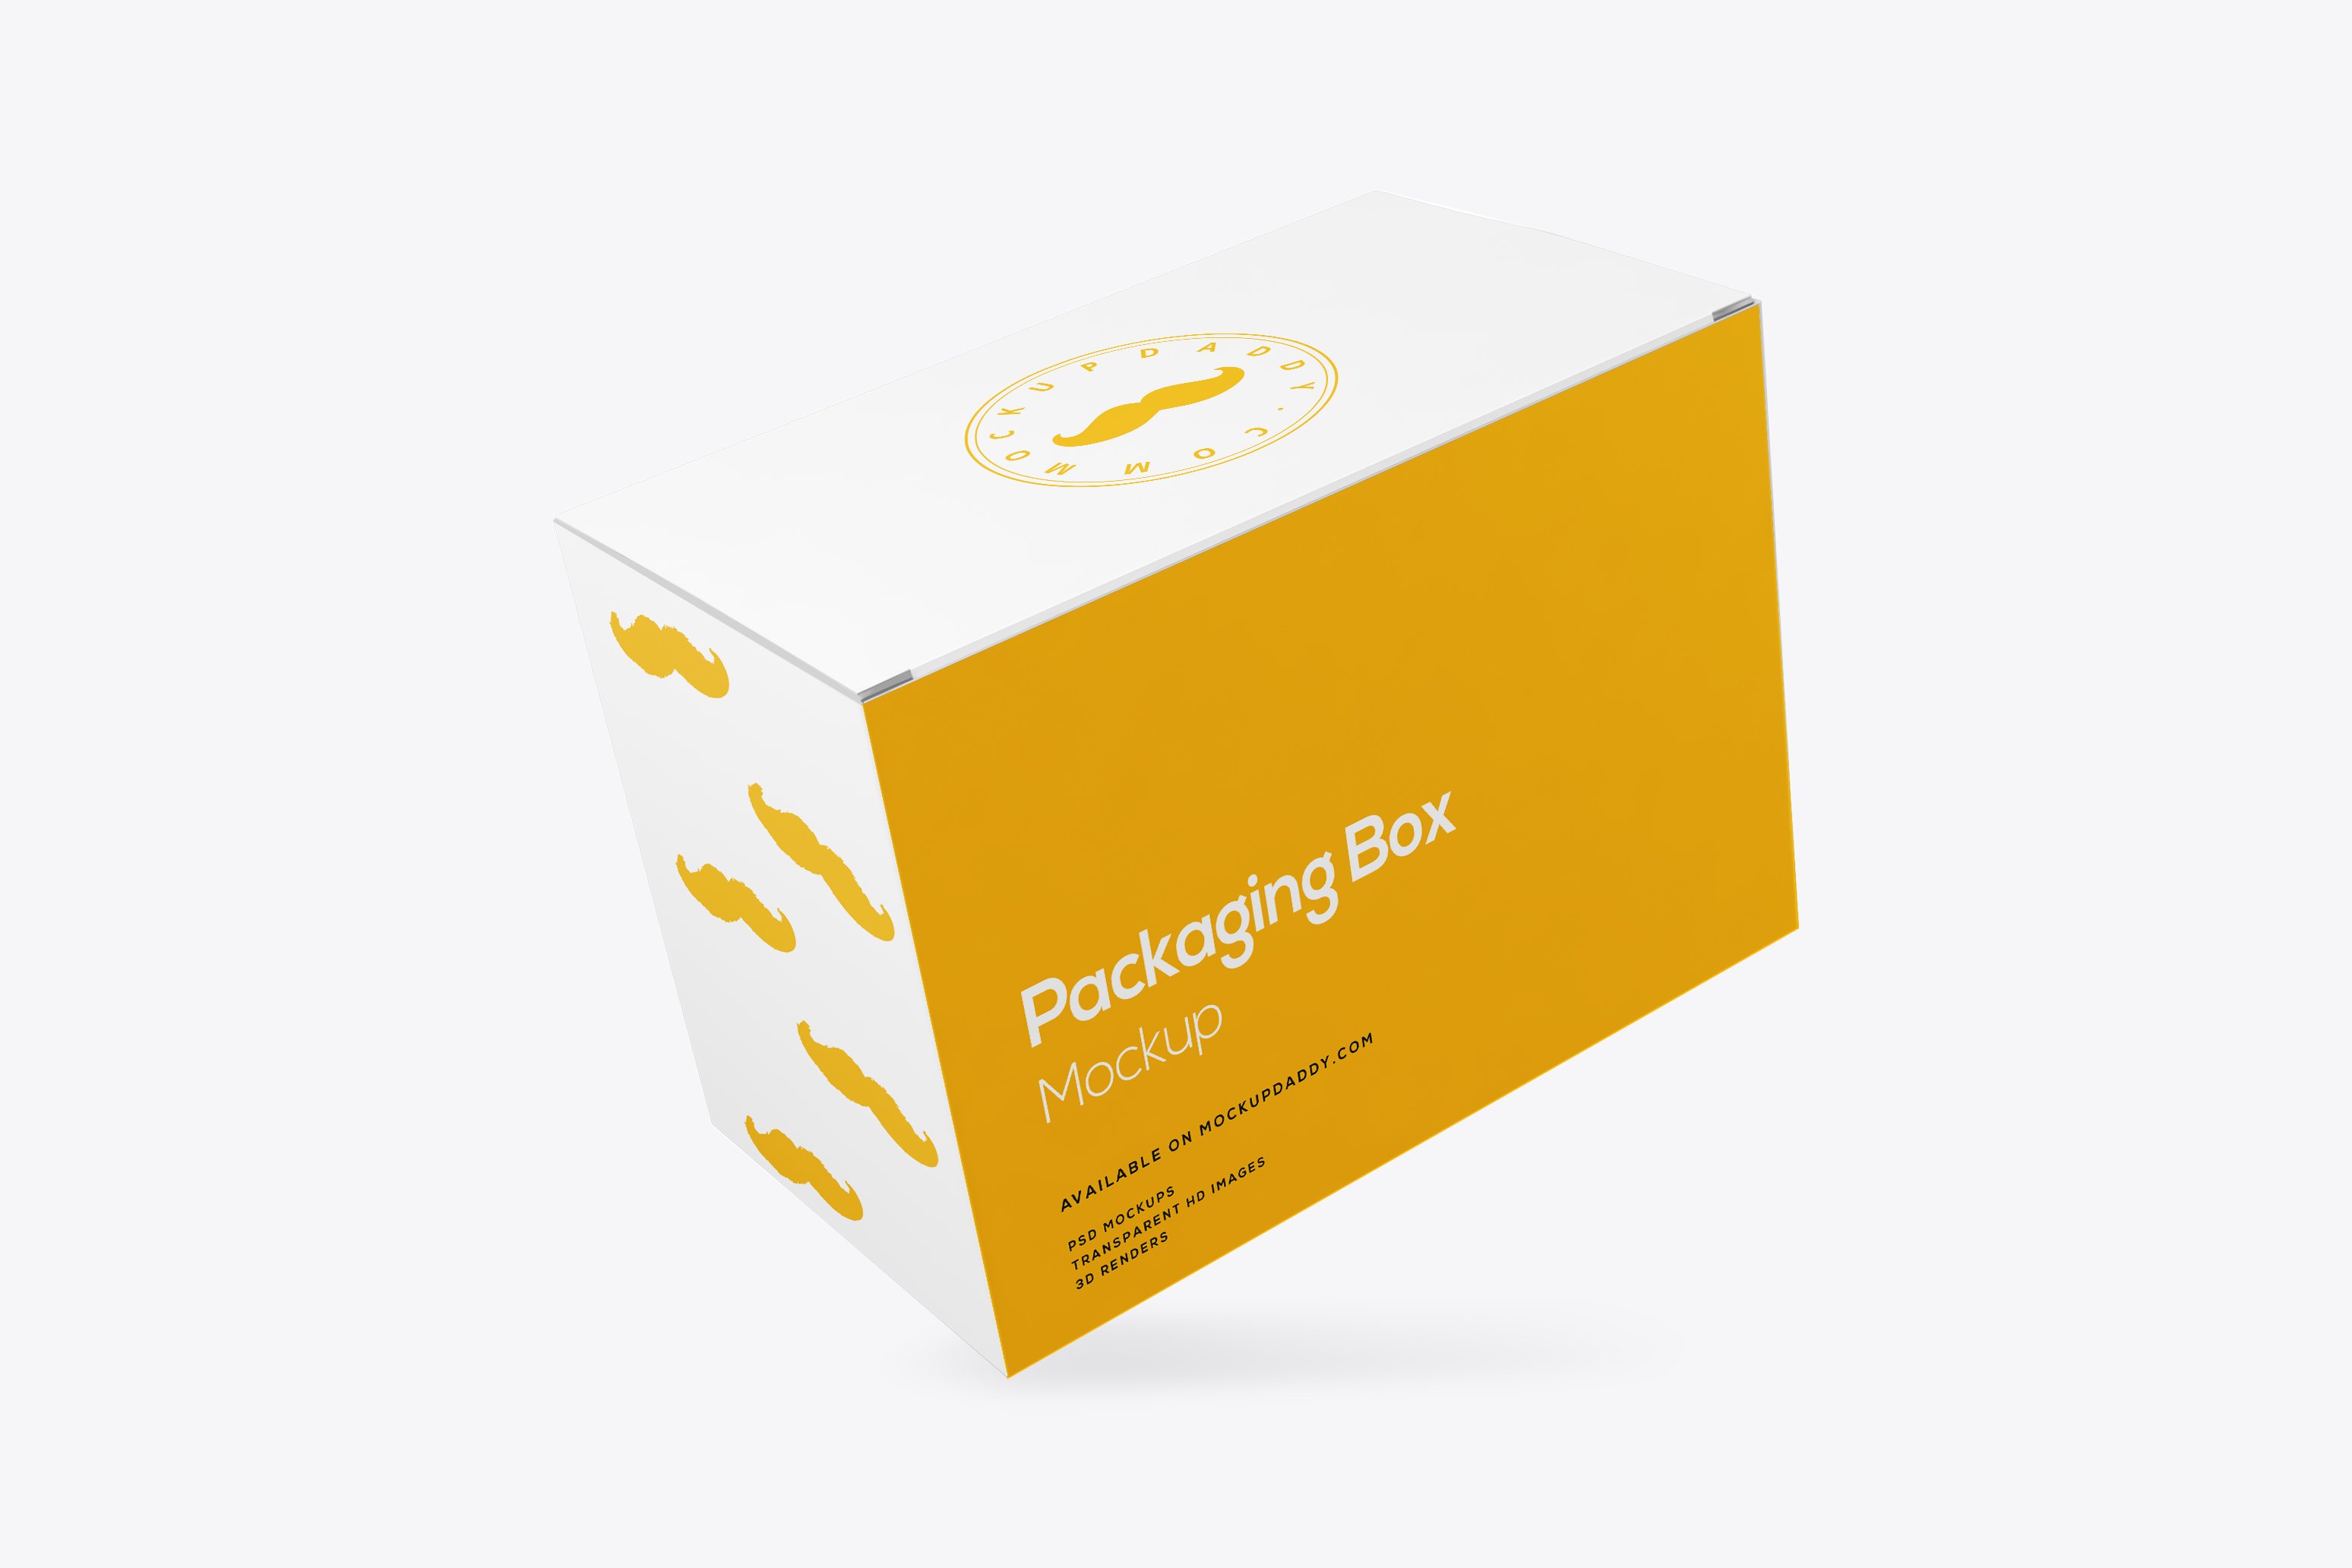 rectangle packaging box mockup free psd 91